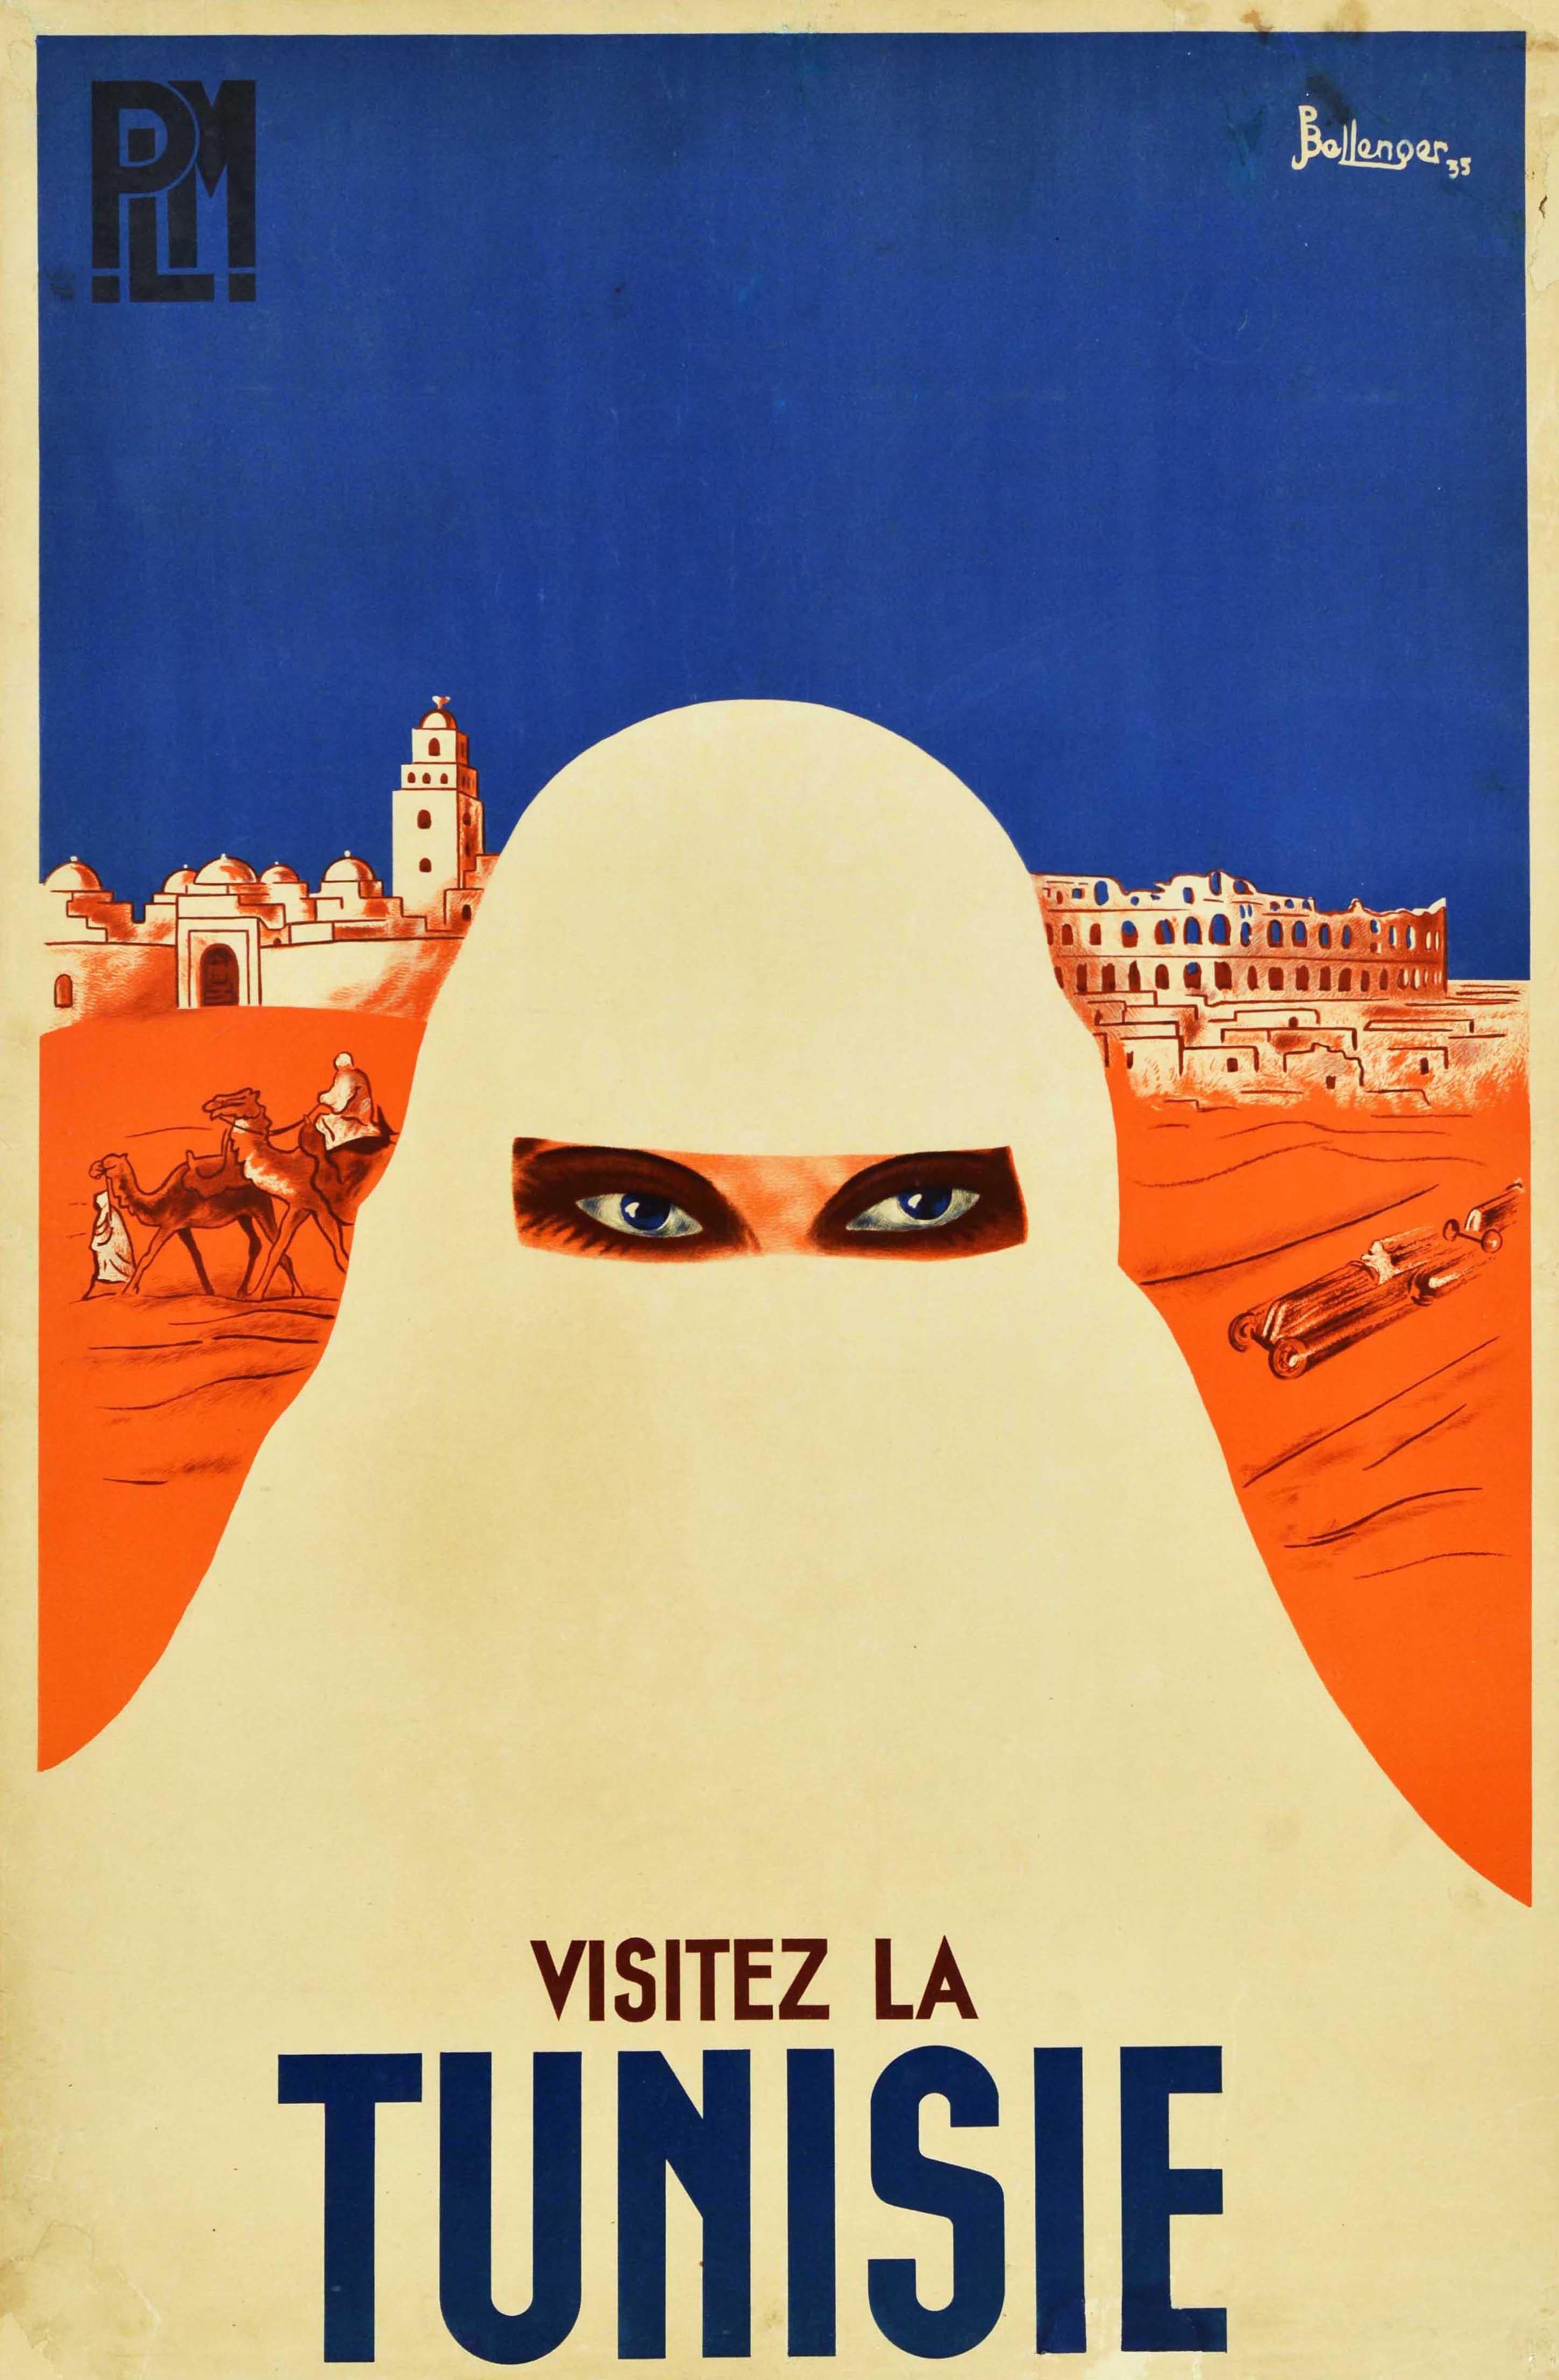 Pierre and Jacques Bellenger Print - Original Vintage PLM Railway Travel Poster Tunisie Tunisia Africa Art Deco